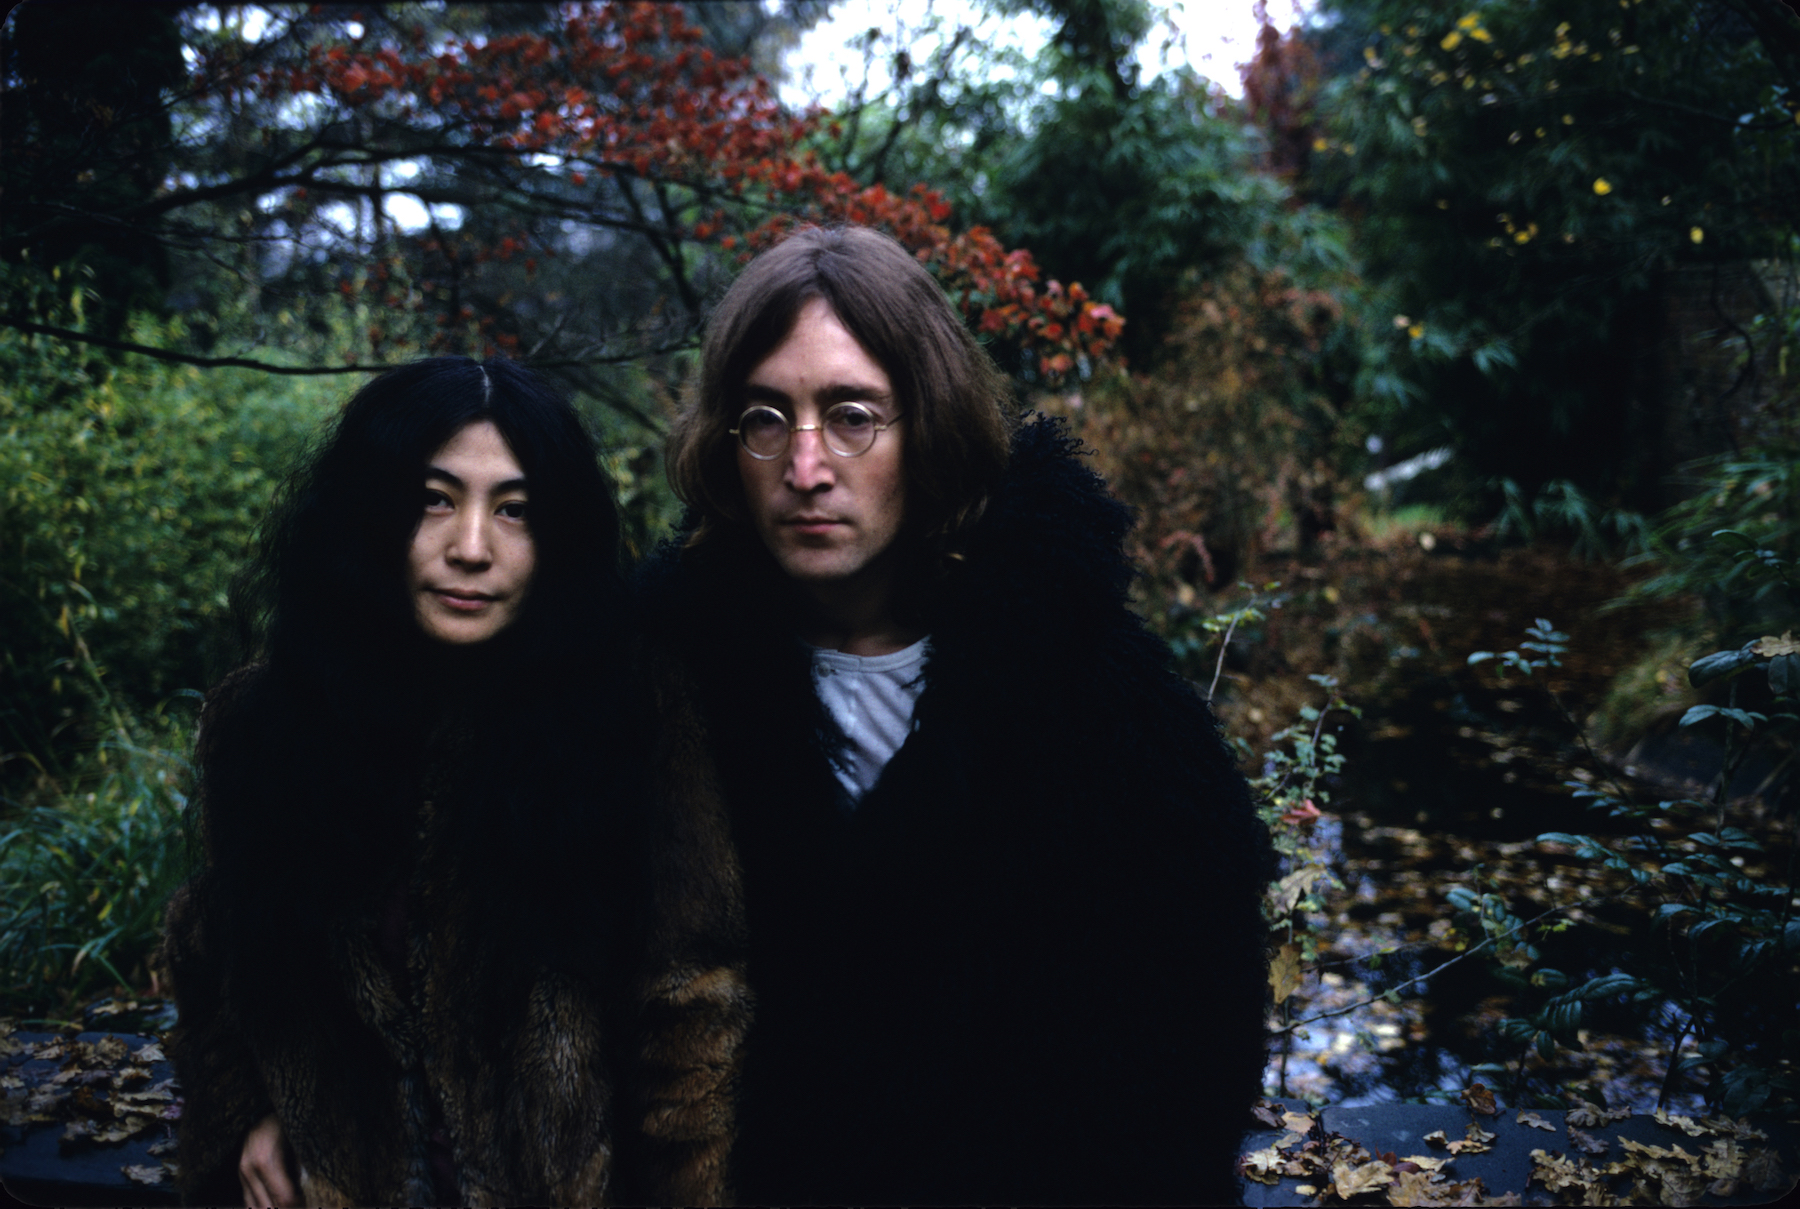 British musican and artist John Lennon (1940 - 1980) and Japanese-born artist and musician Yoko Ono